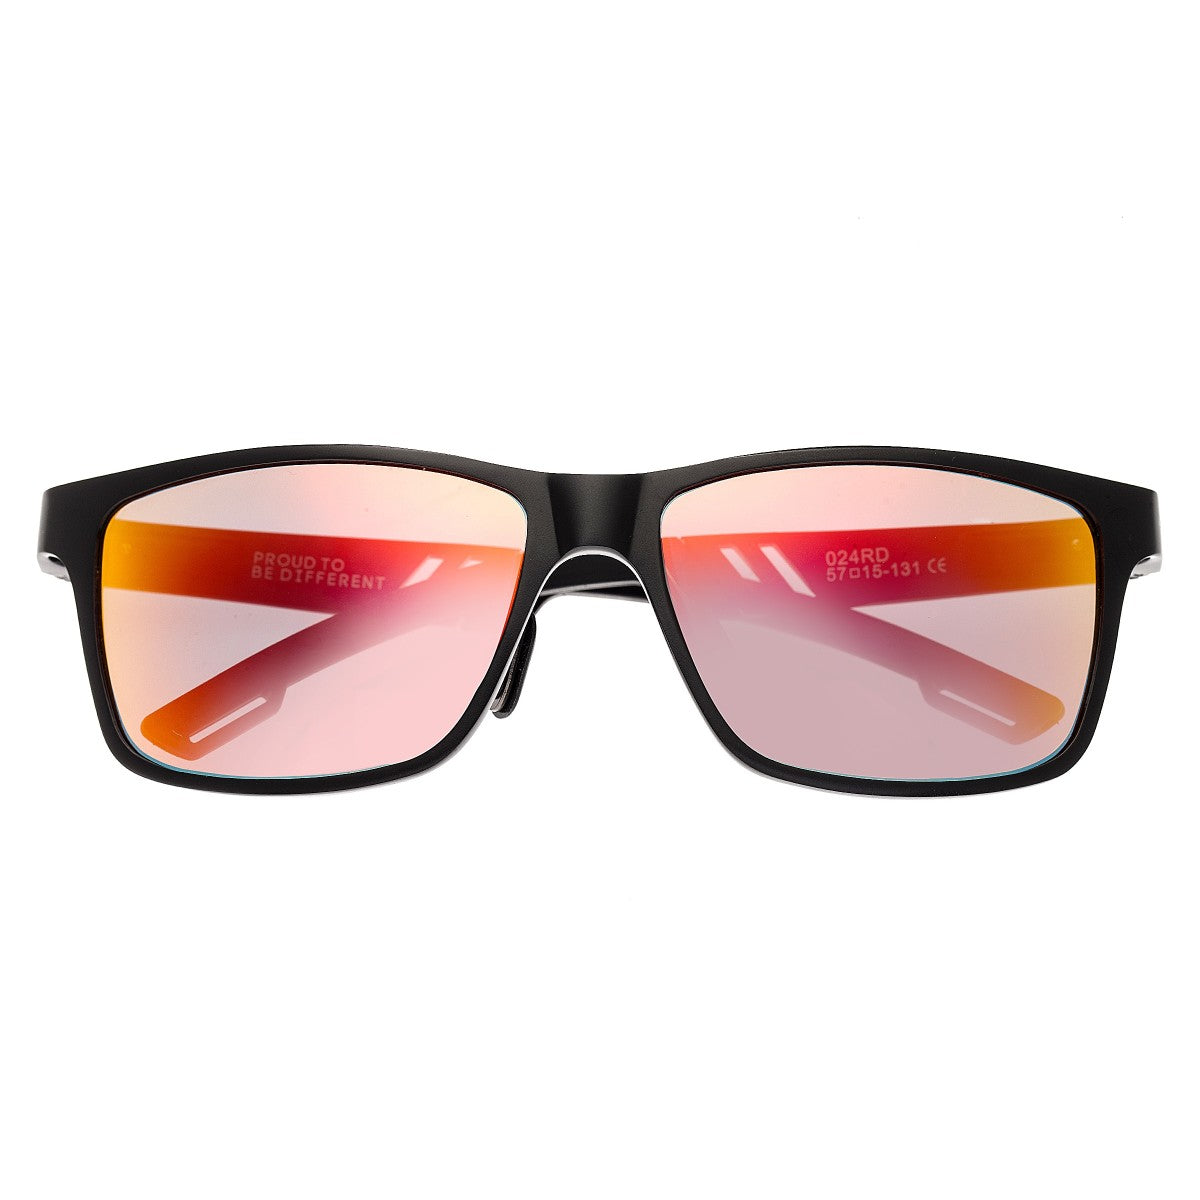 Breed Pyxis Titanium Polarized Sunglasses - Black/Red-Yellow - BSG024RD